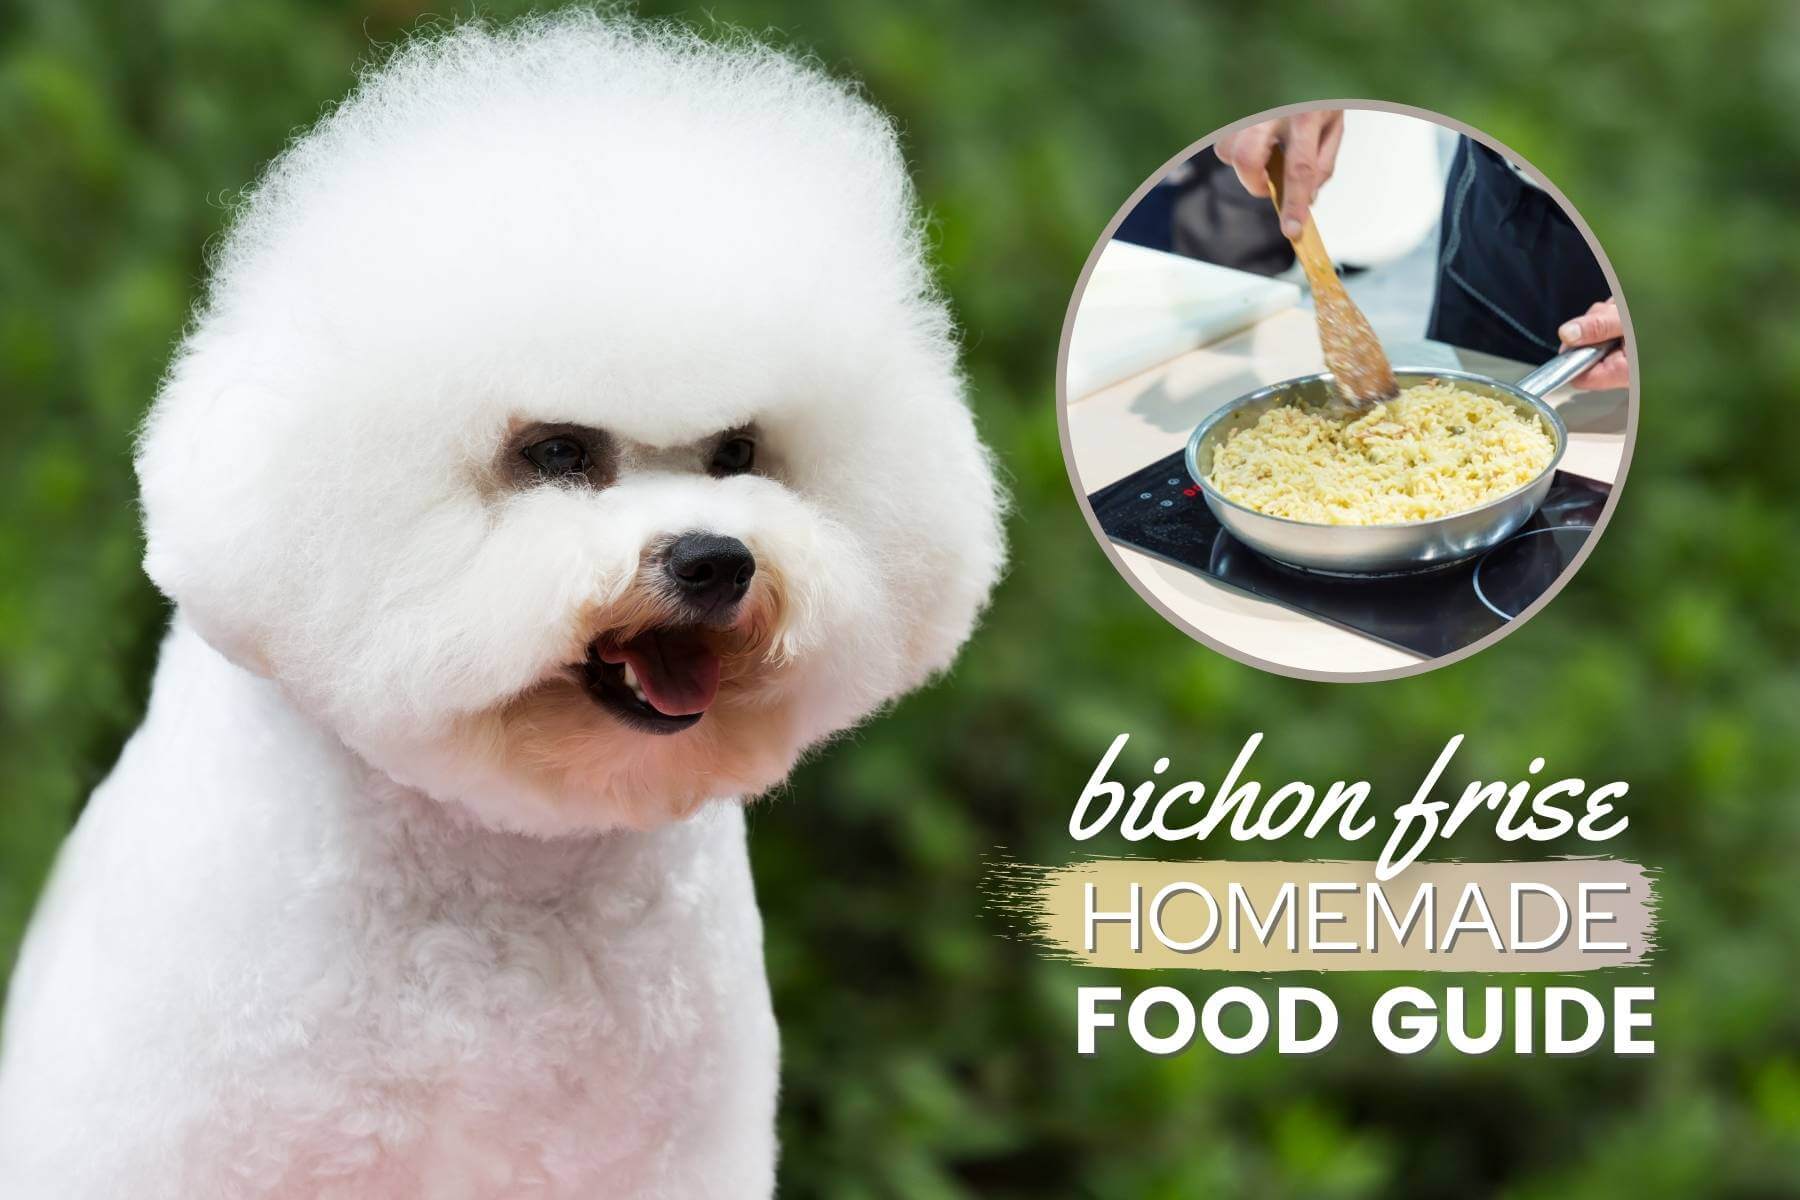 bichon frise homemade dog food